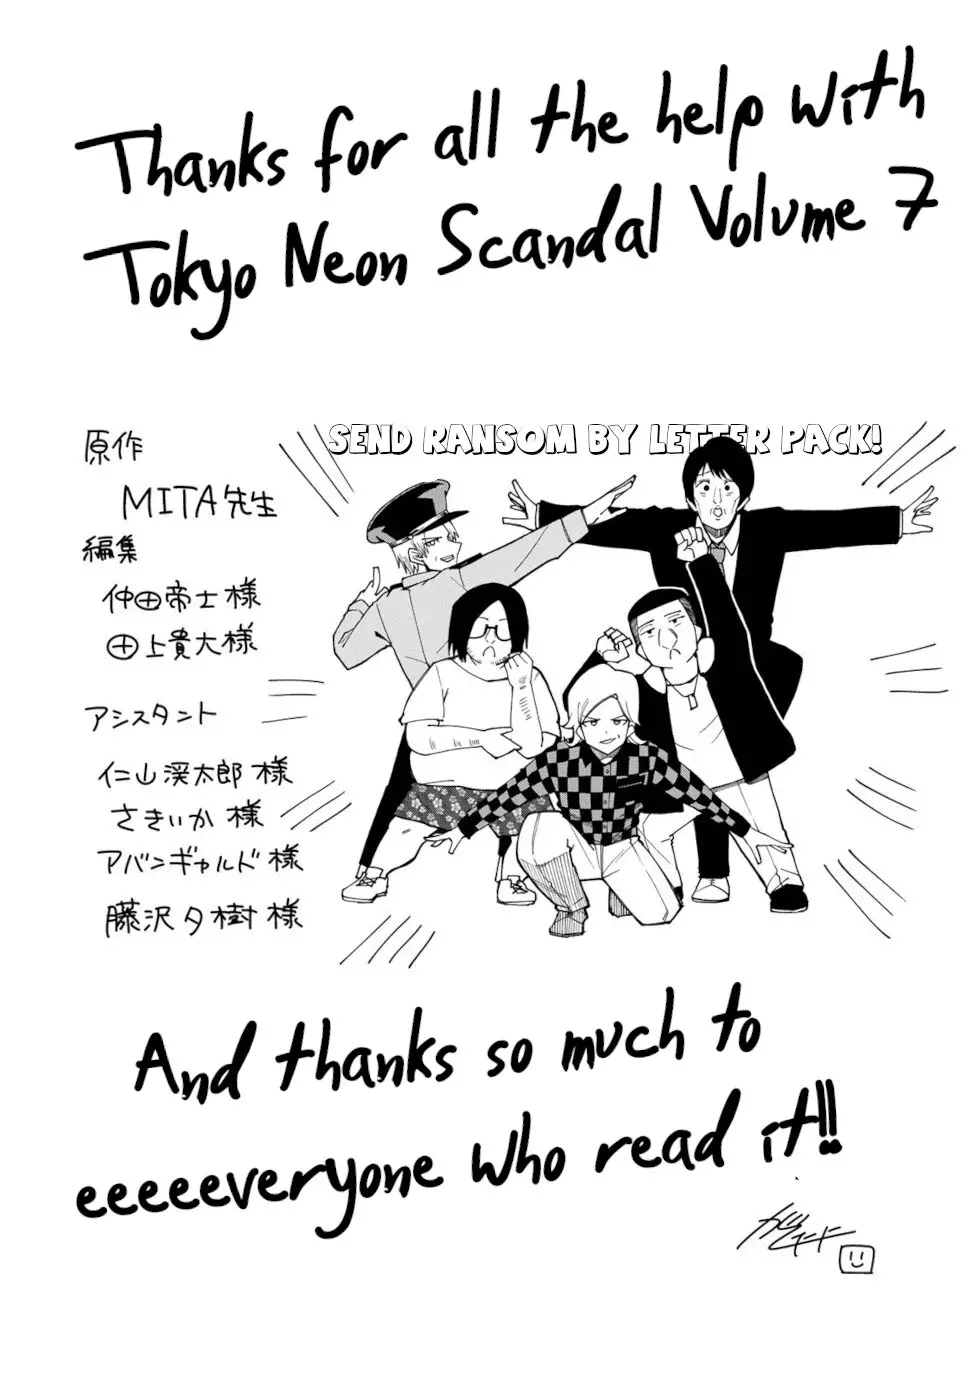 Tokyo Neon Scandal - 72 page 27-159f41d3